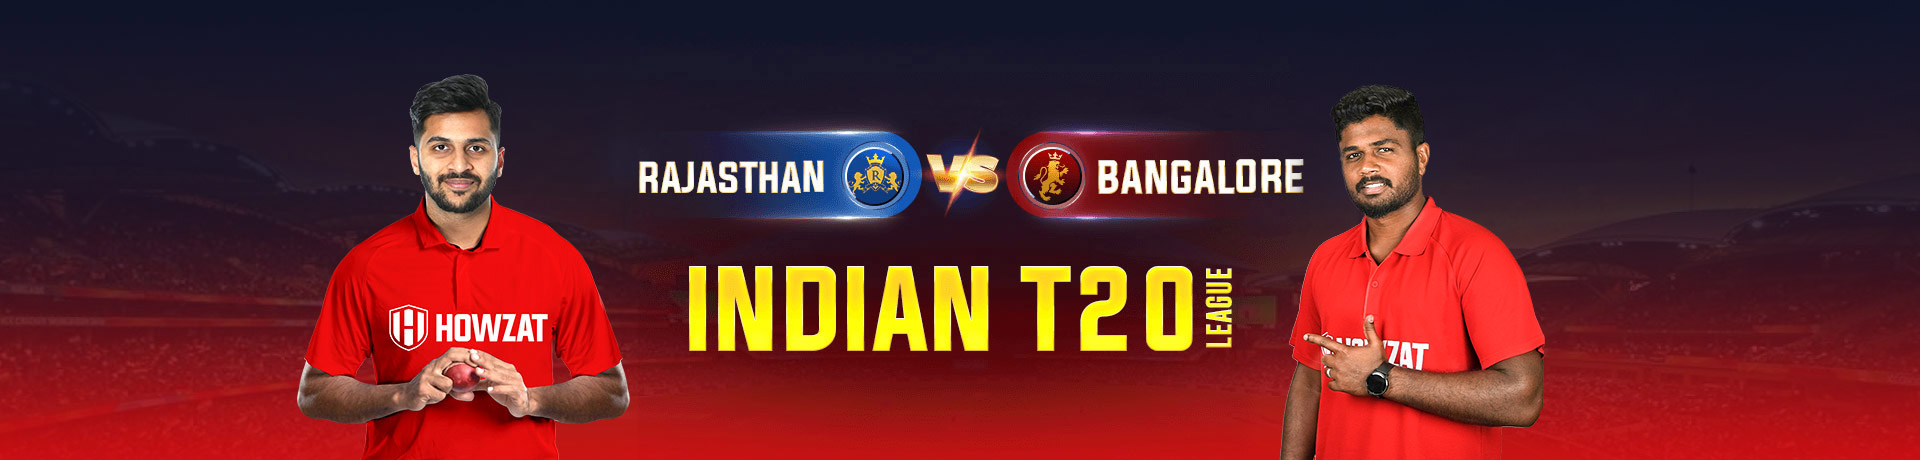 Rajasthan vs Banglore Indian T20 League